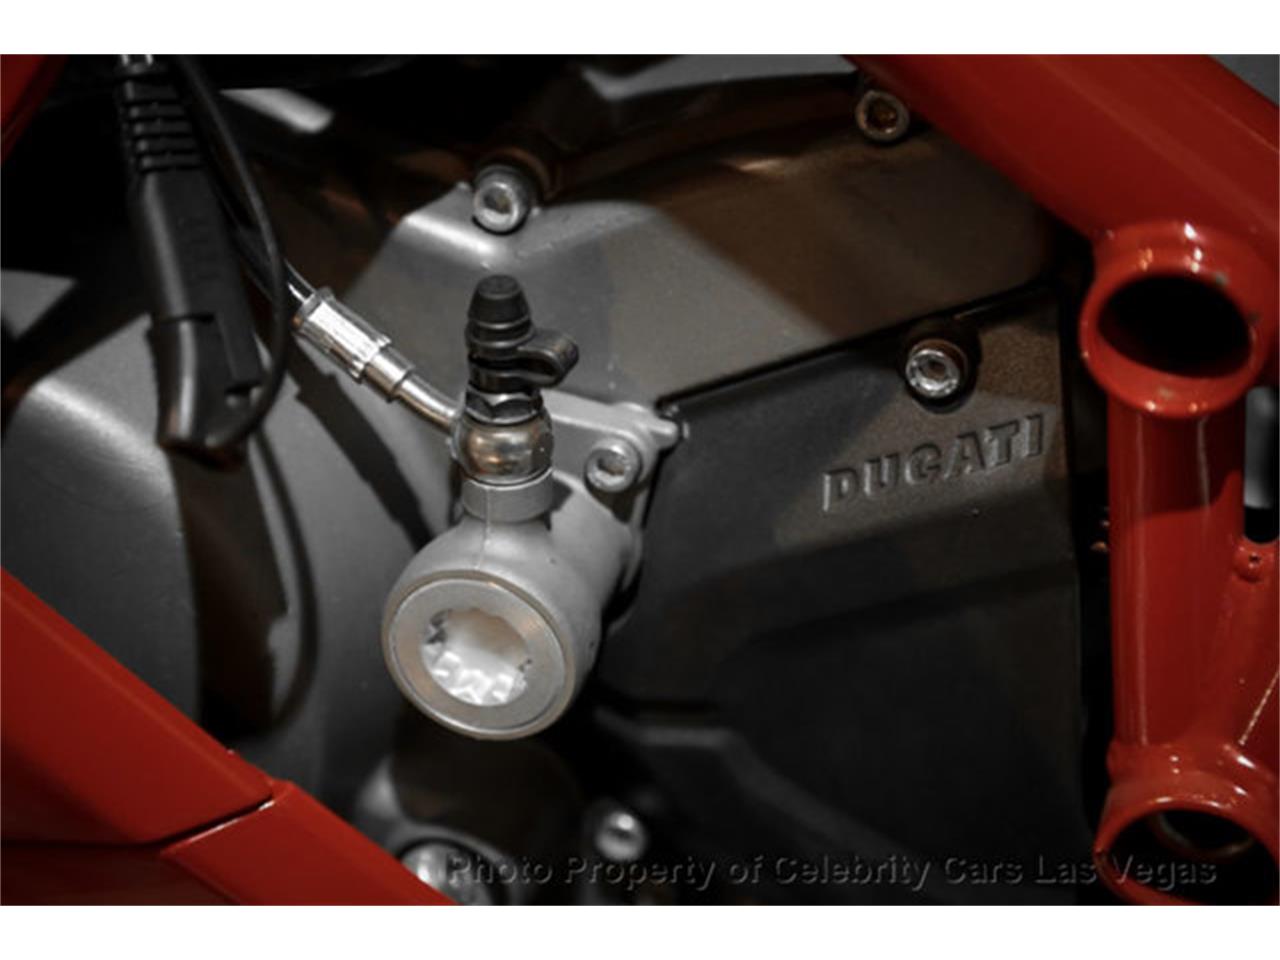 2010 Ducati Motorcycle for sale in Las Vegas, NV – photo 26